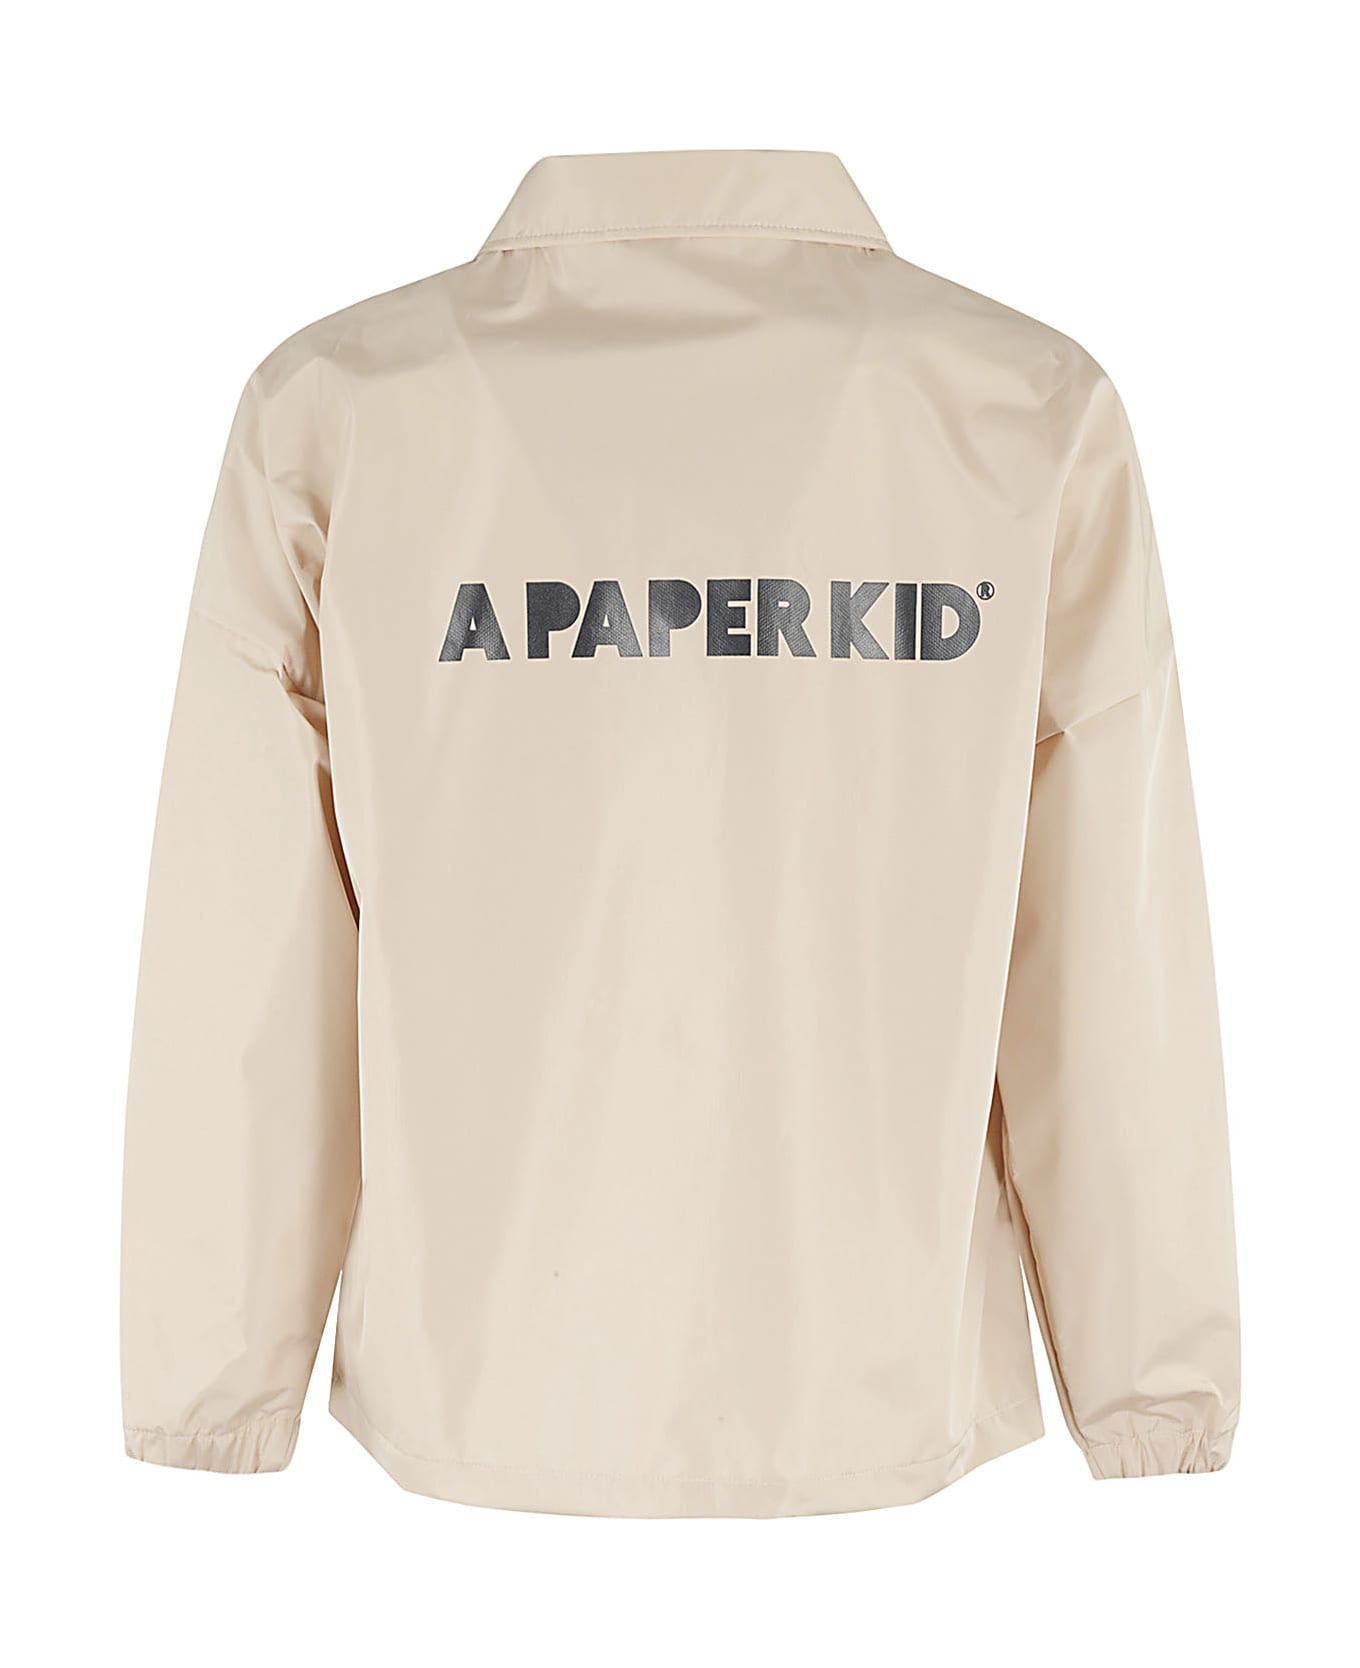 A Paper Kid Nylon Jacket - Sabbia